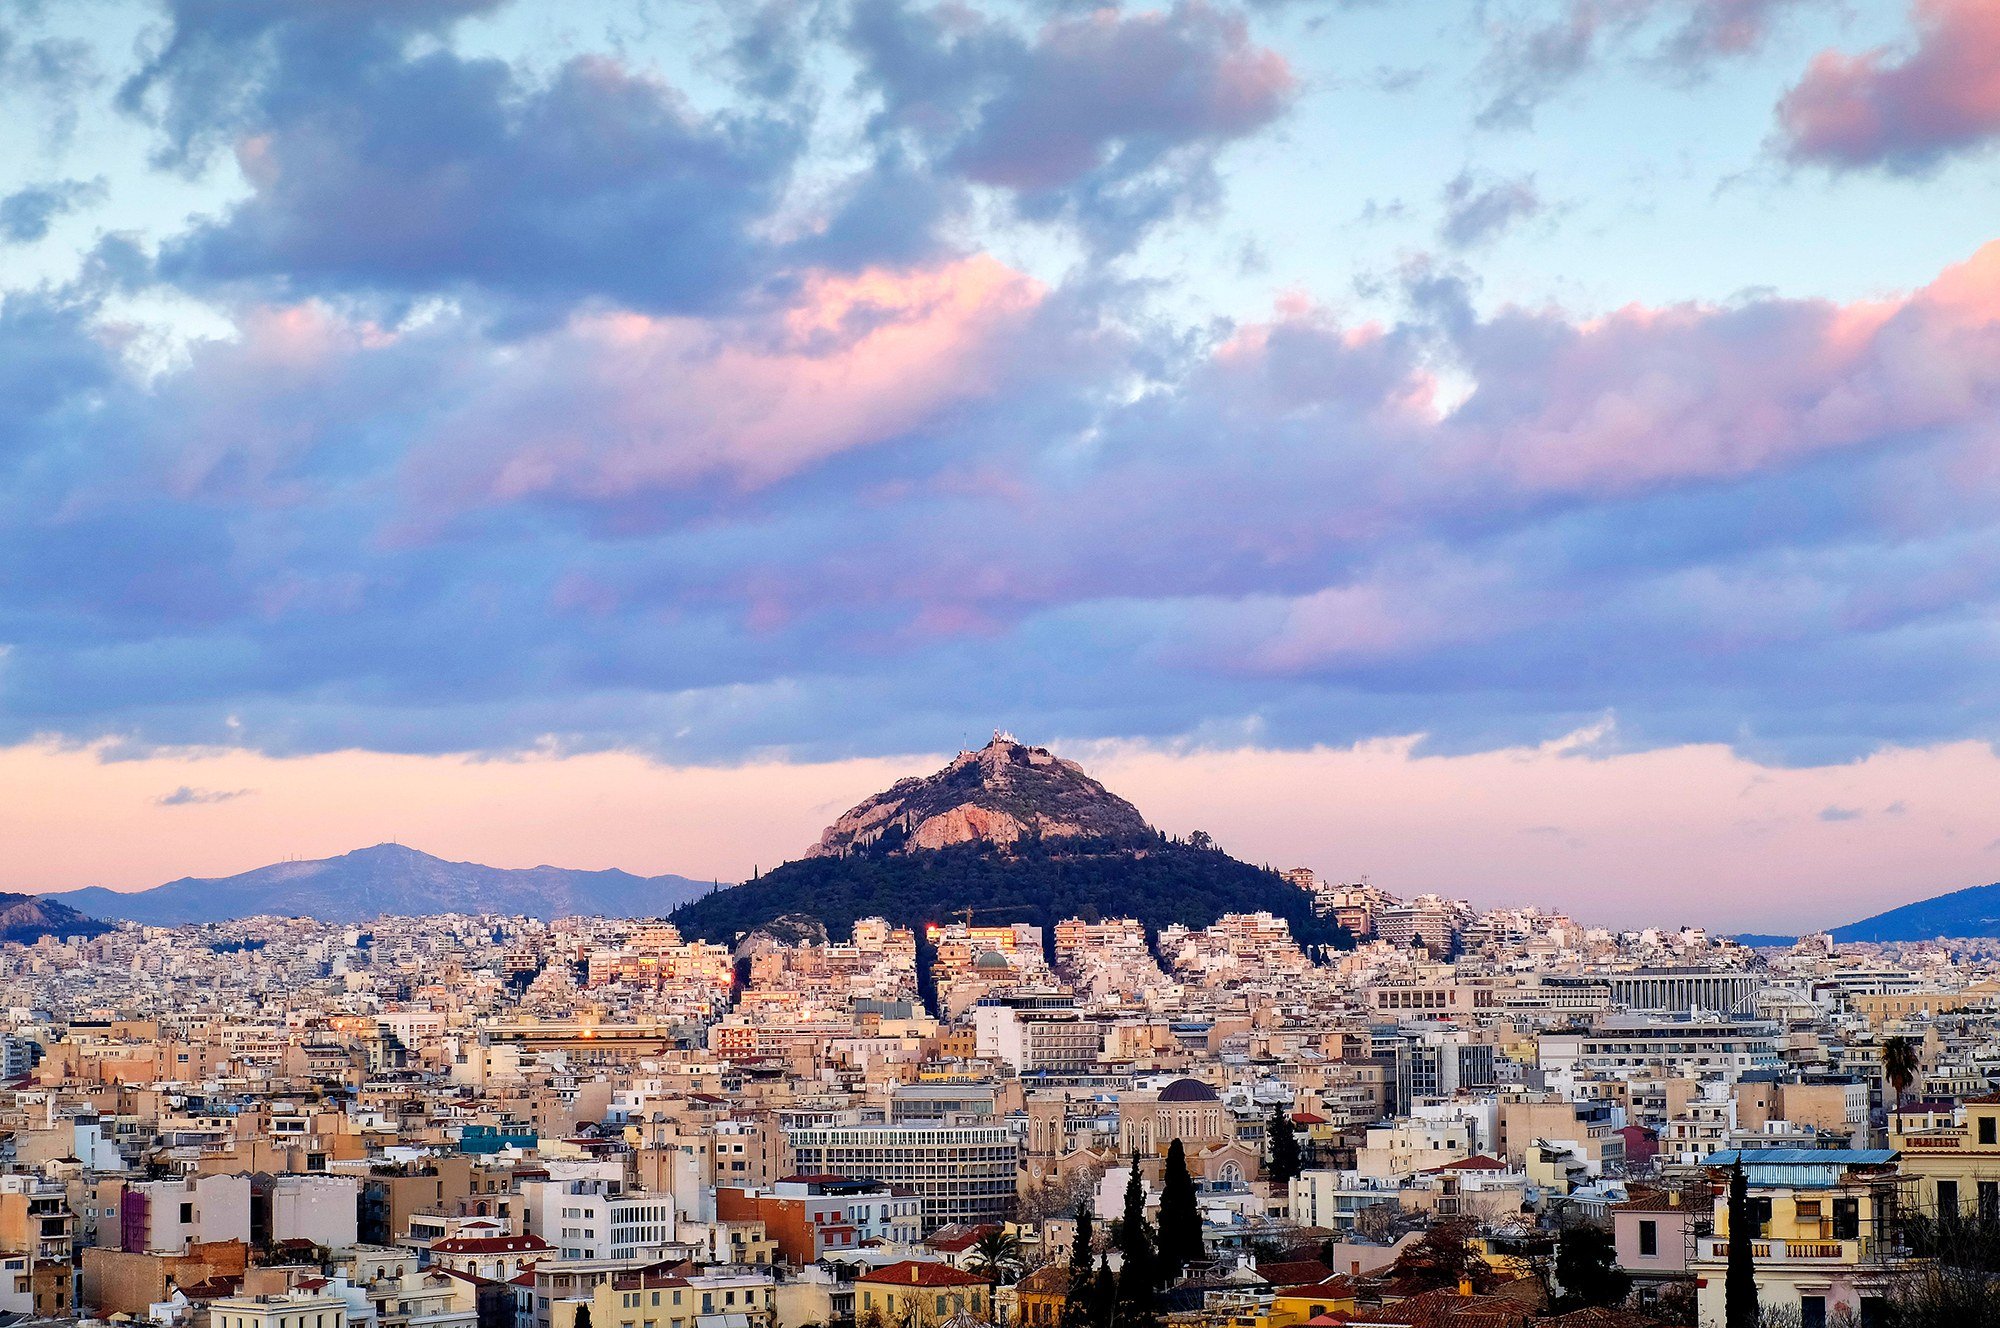 More information about "Μία στις τρεις ευρωπαϊκές πόλεις «αδιαφορεί» για την κλιματική αλλαγή, με πρώτη την Αθήνα"